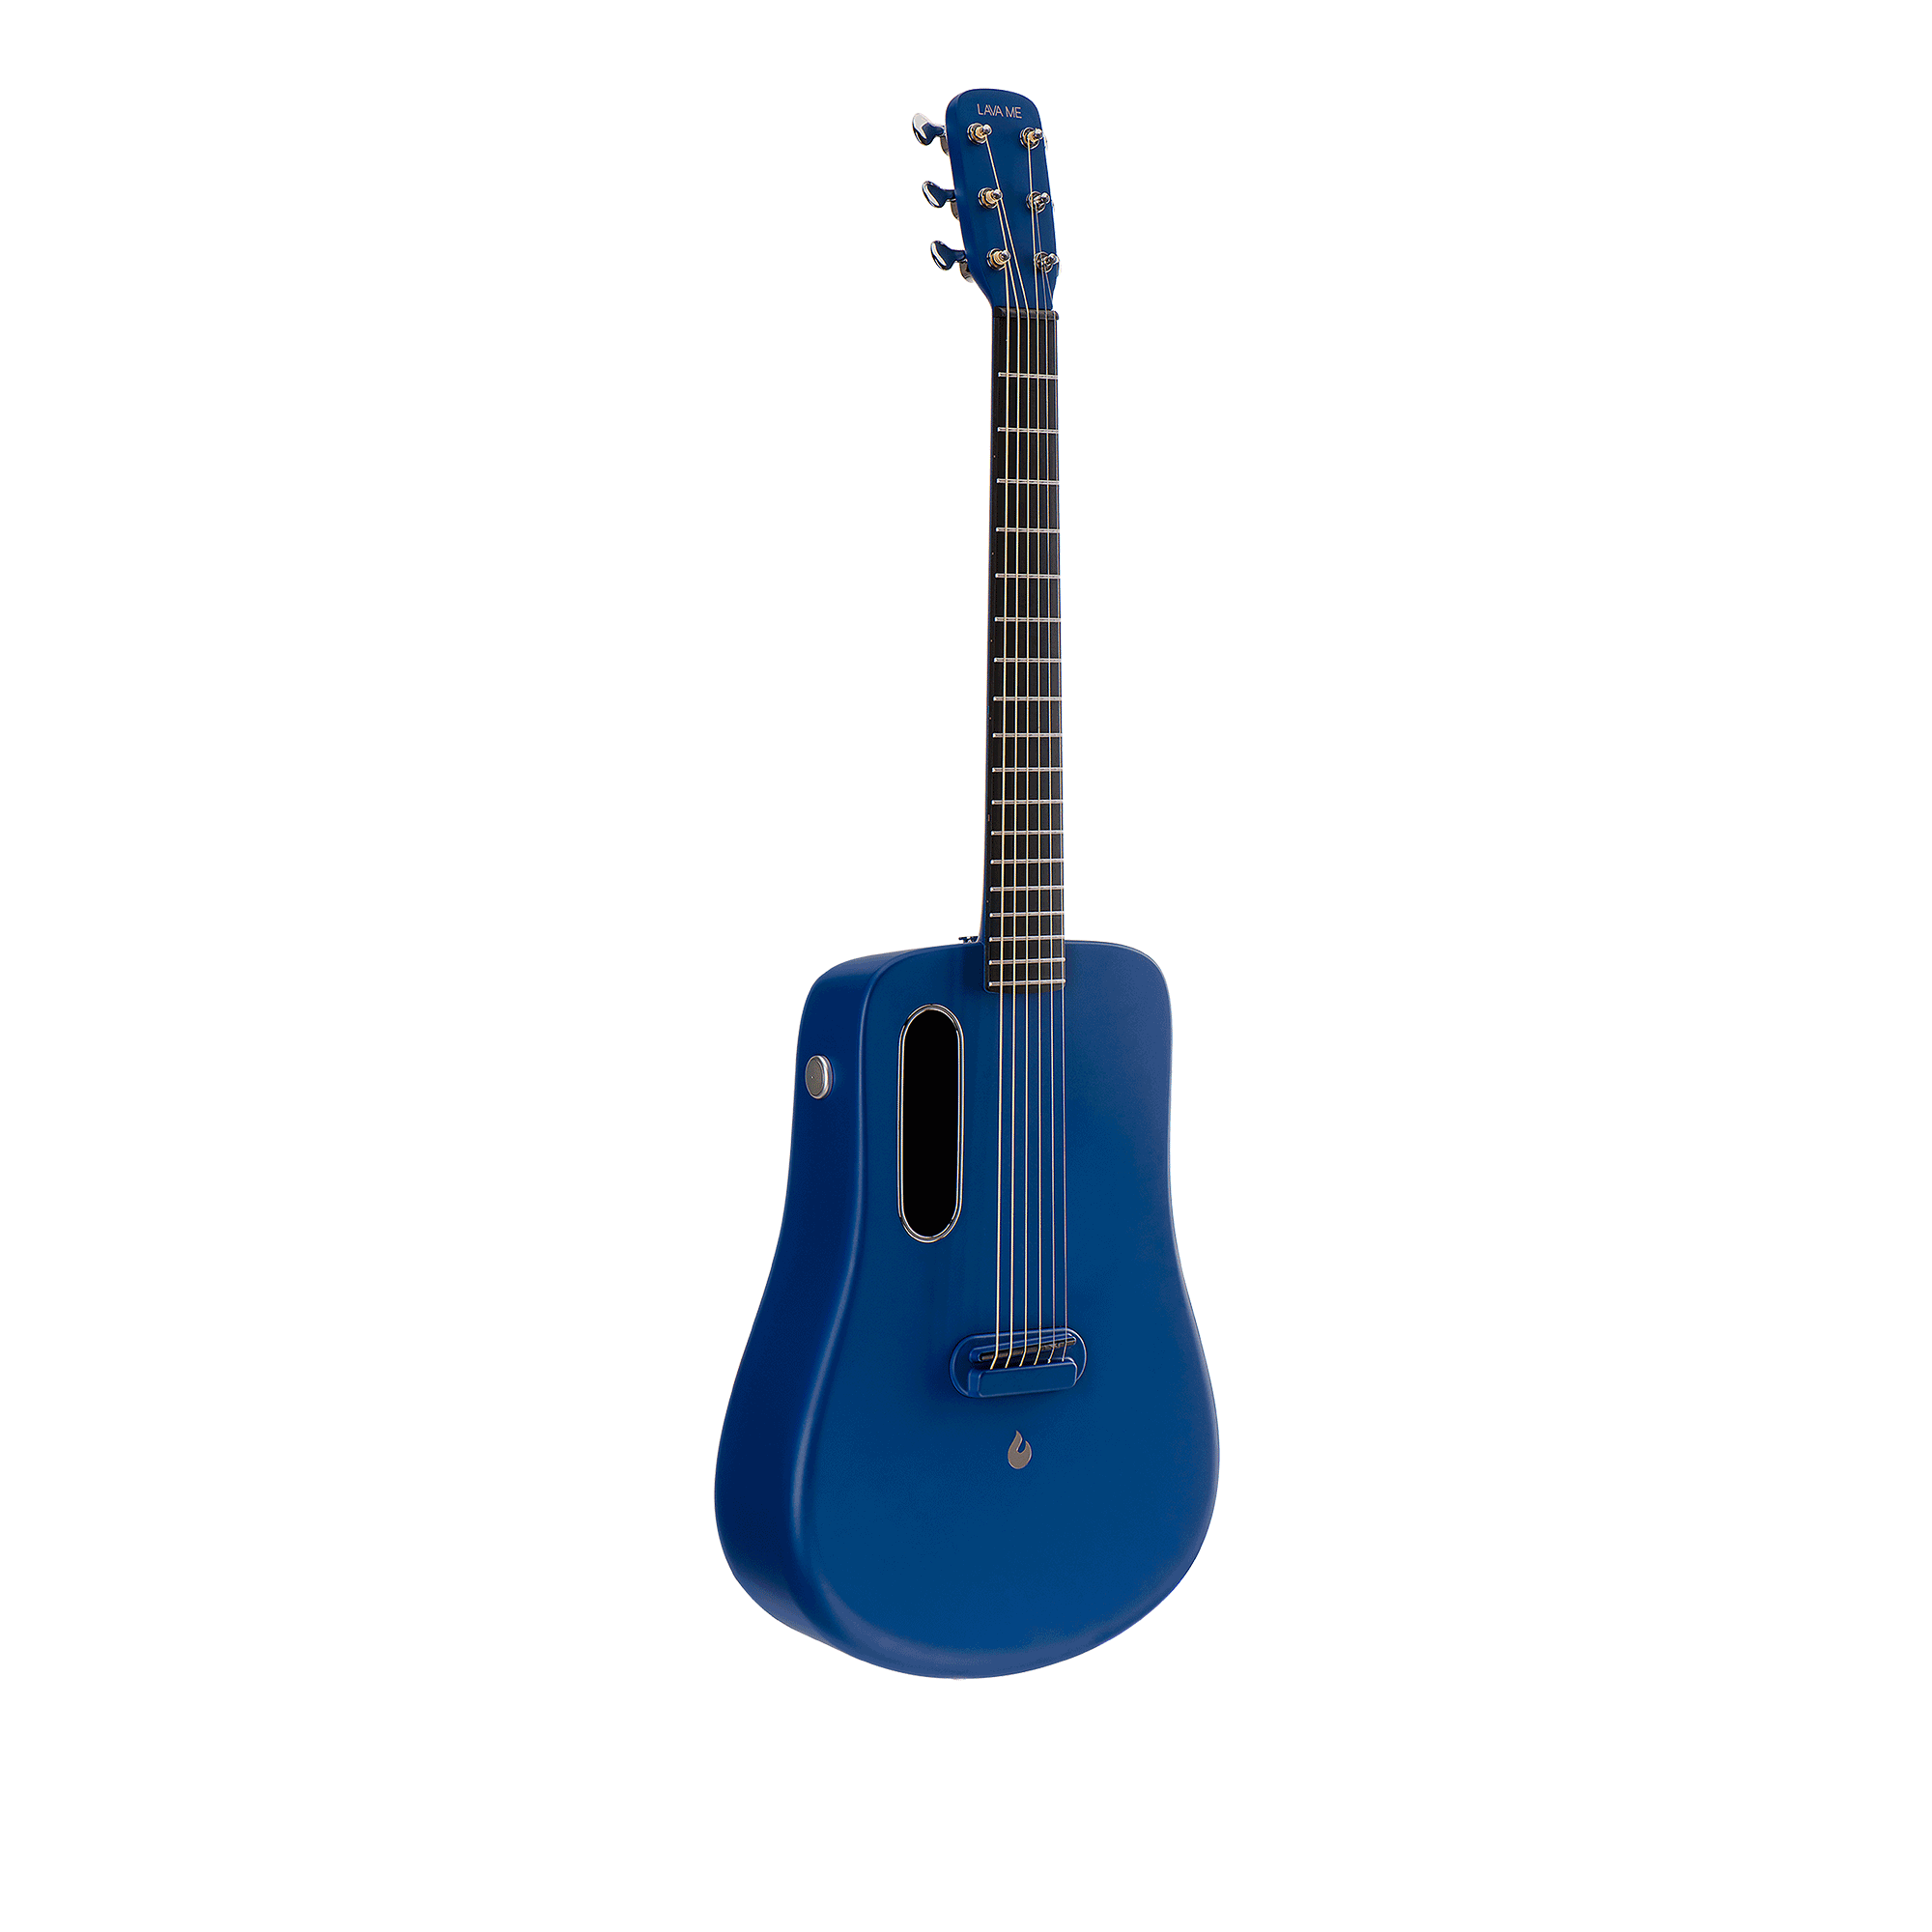 Đàn Guitar Acoustic Lava Me 2 EQ Blue